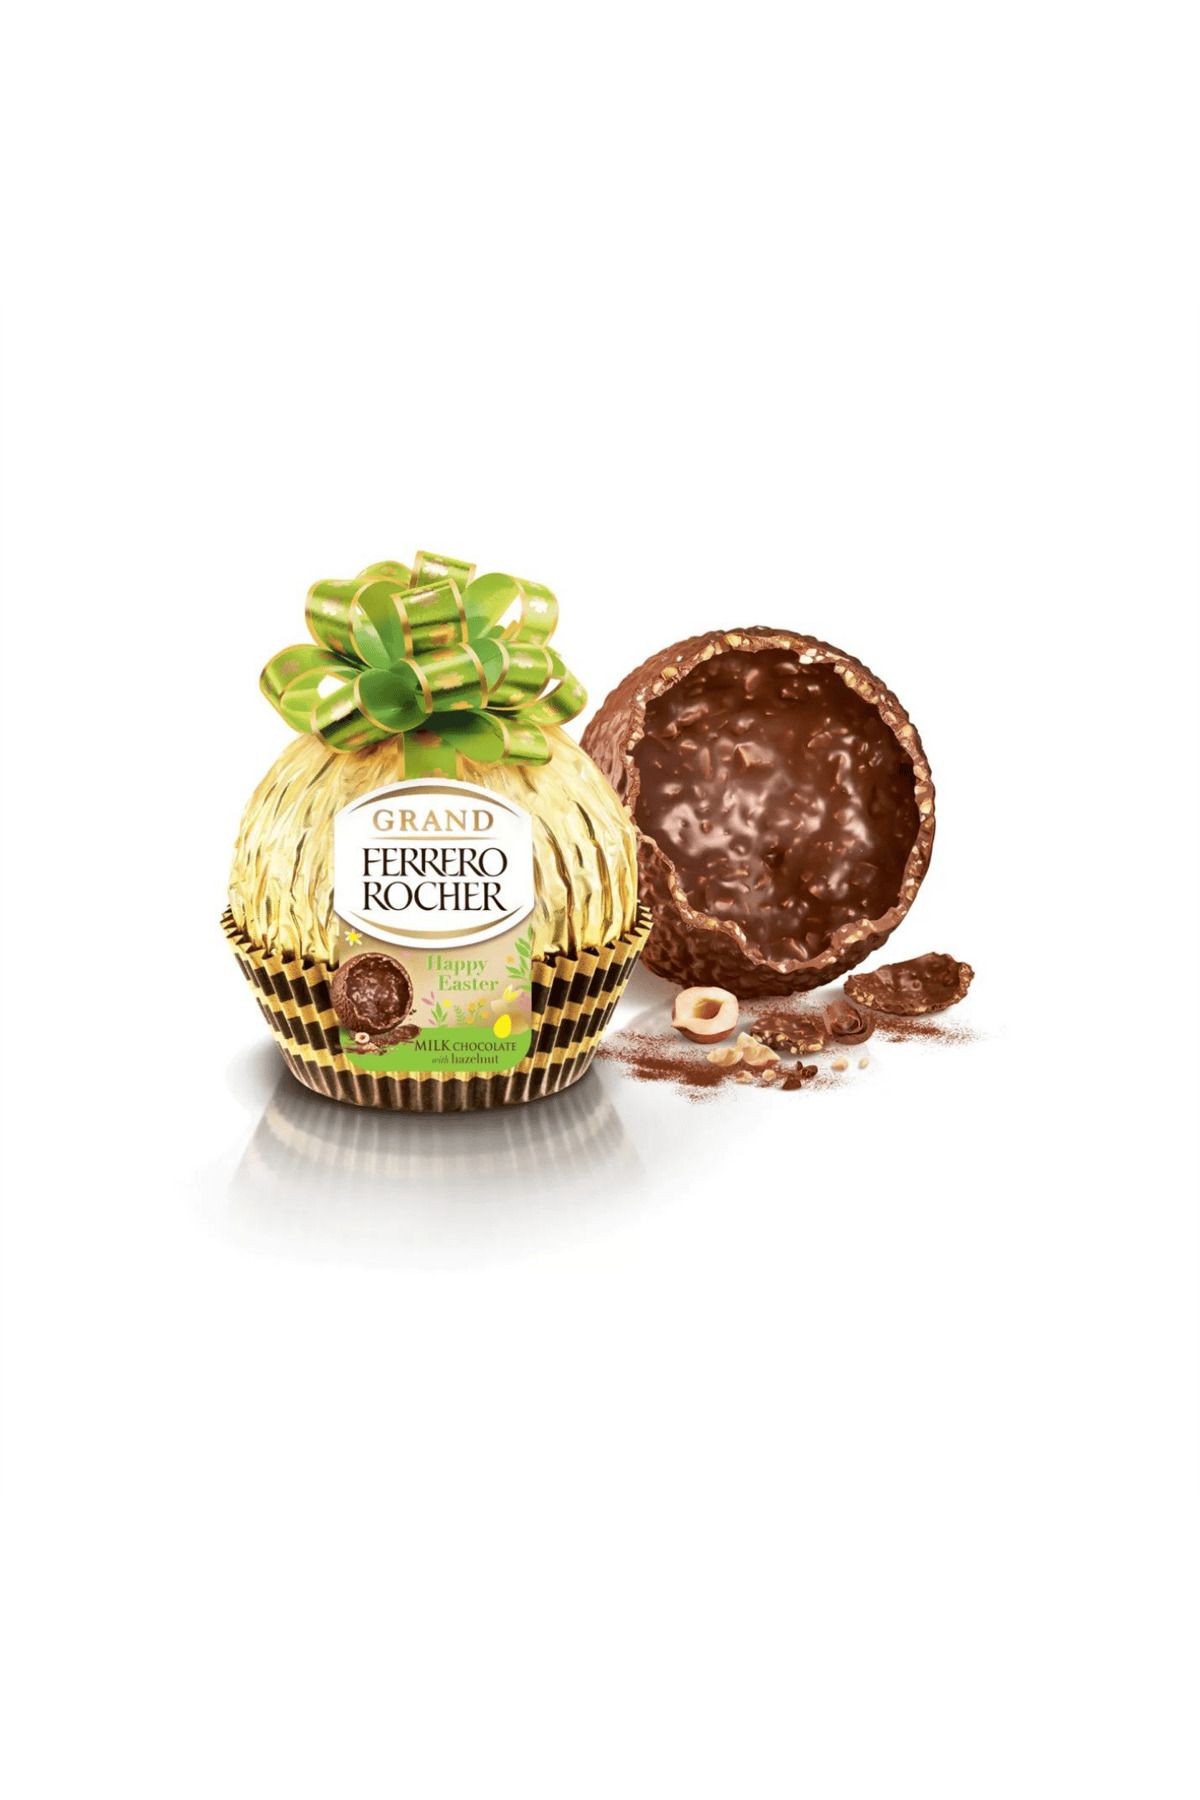 Ferrero Rocher Ferrero - Grand Ferrero Rocher - 125GR